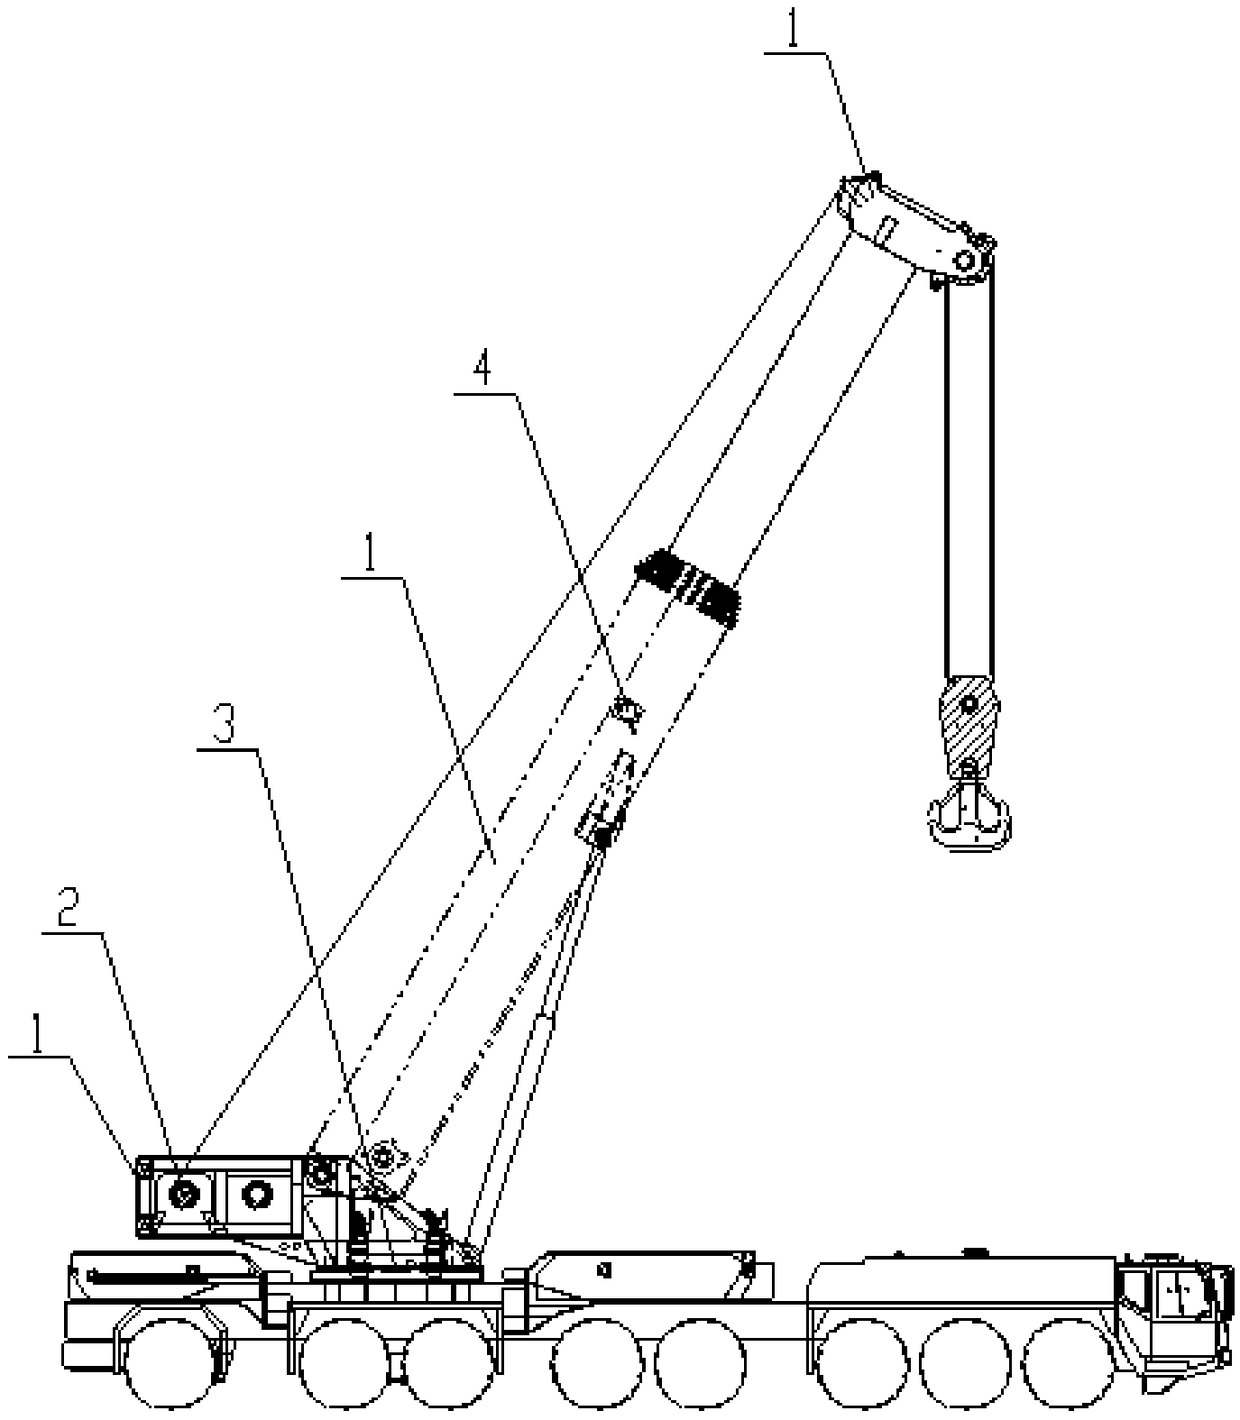 Crane hoisting control method and system